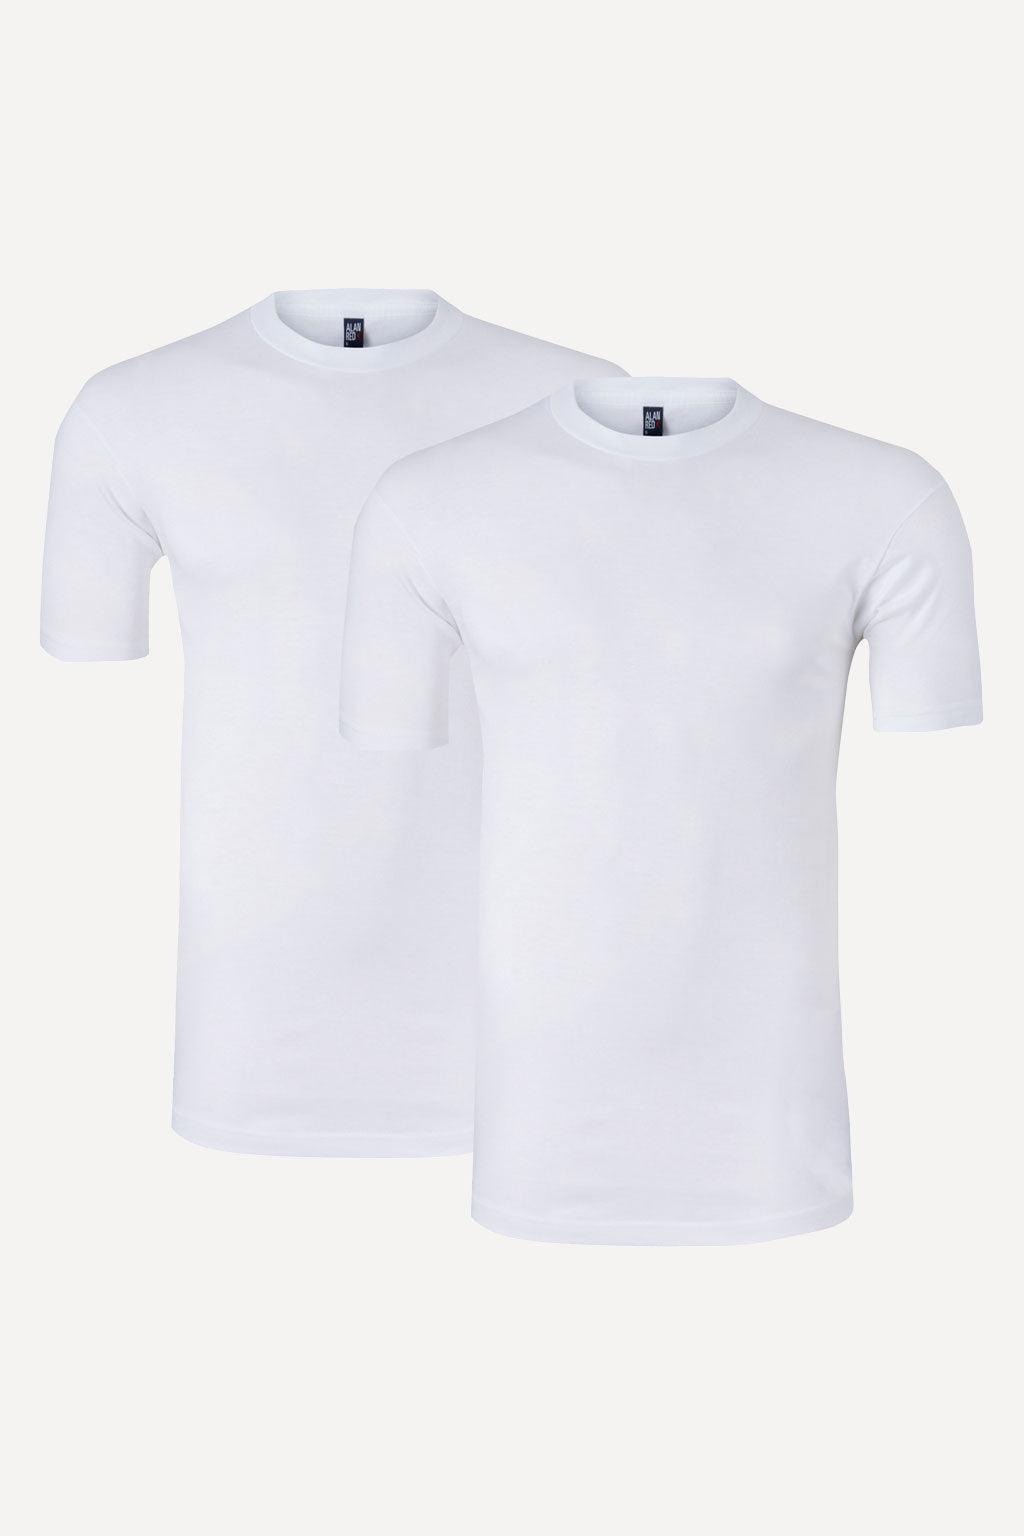 Alan Red t-shirt - Big Boss | the menswear concept